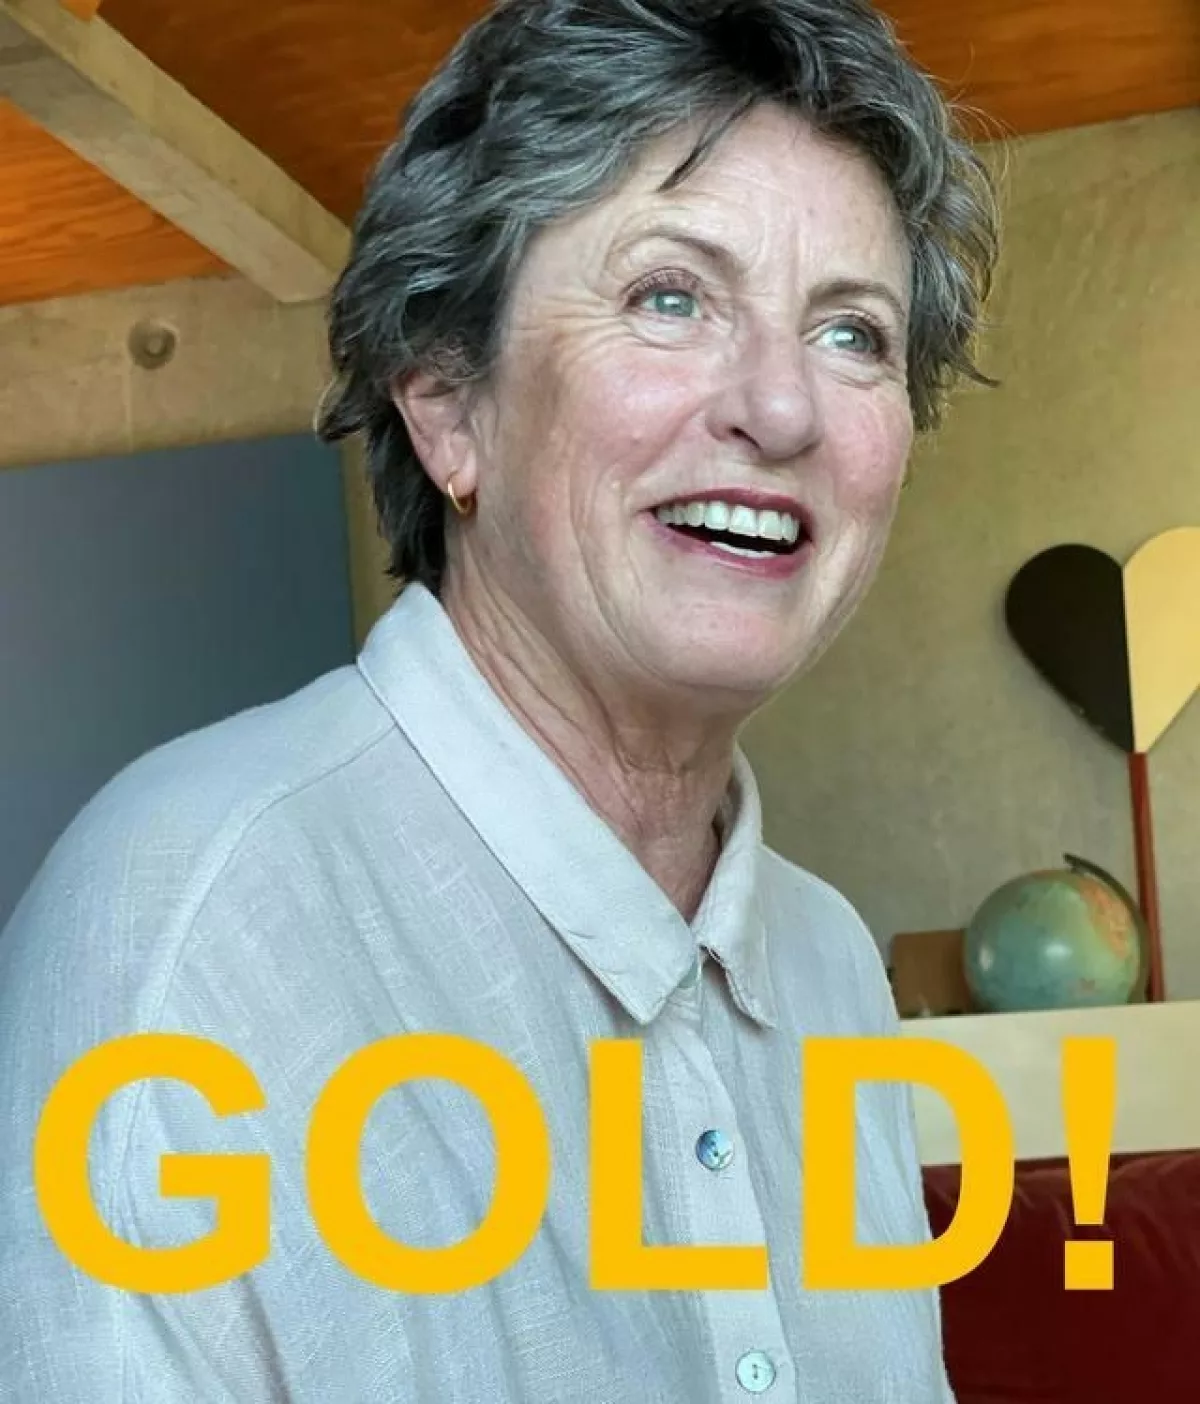 Gold julie stout gold medal winner 2021 01